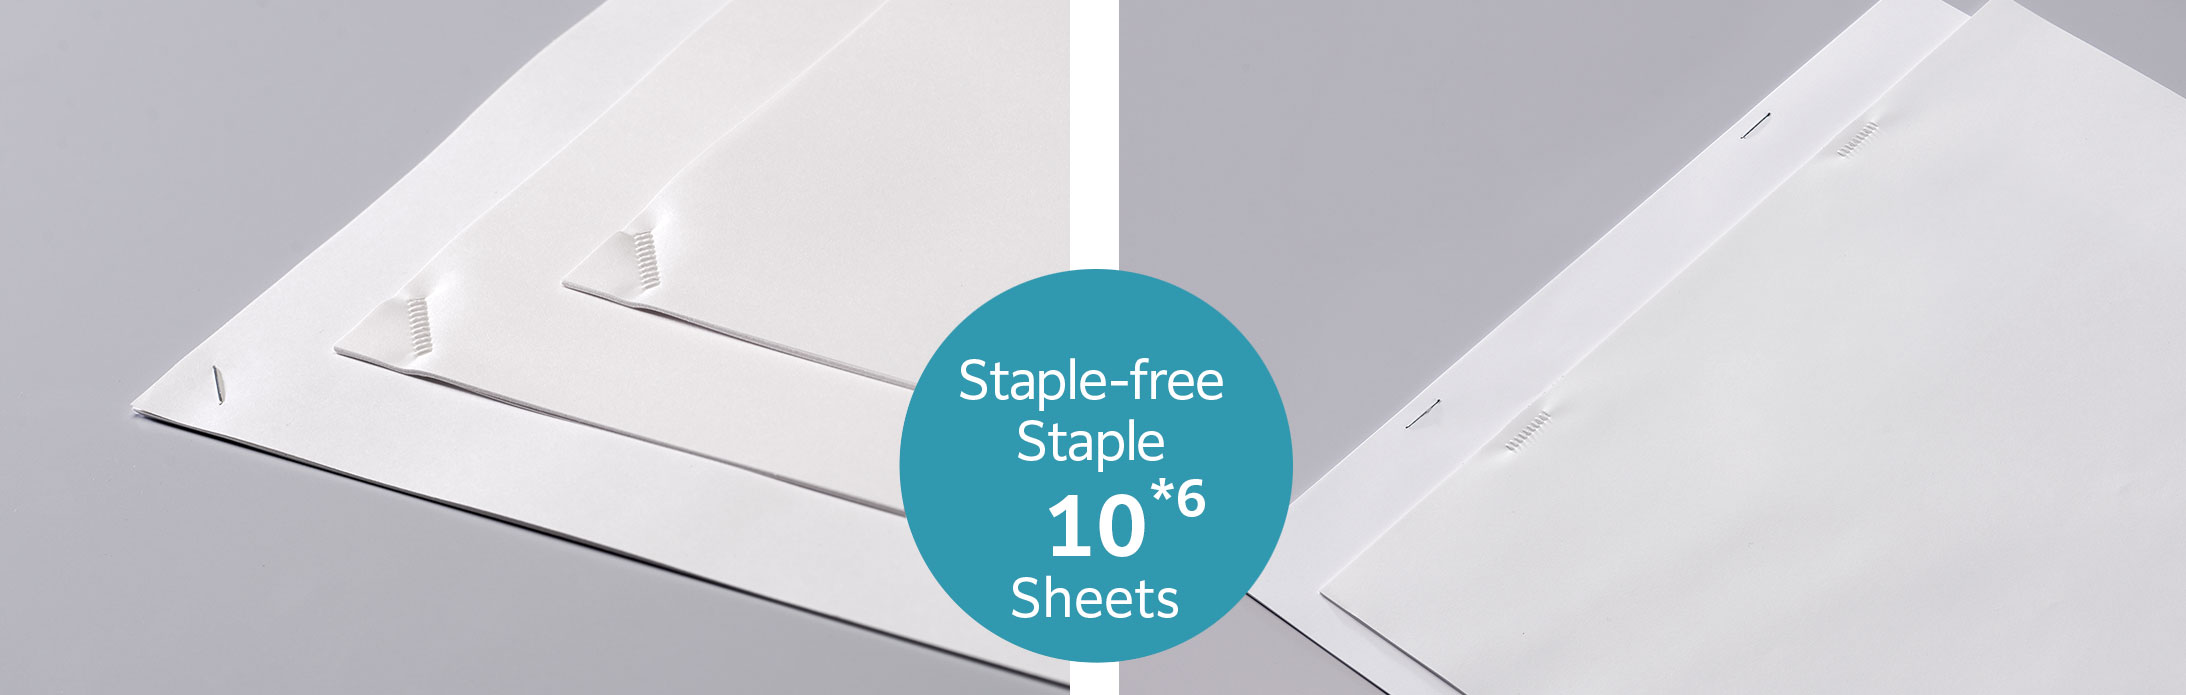 Multifunction Printer Staple-free Staple 10 Sheets